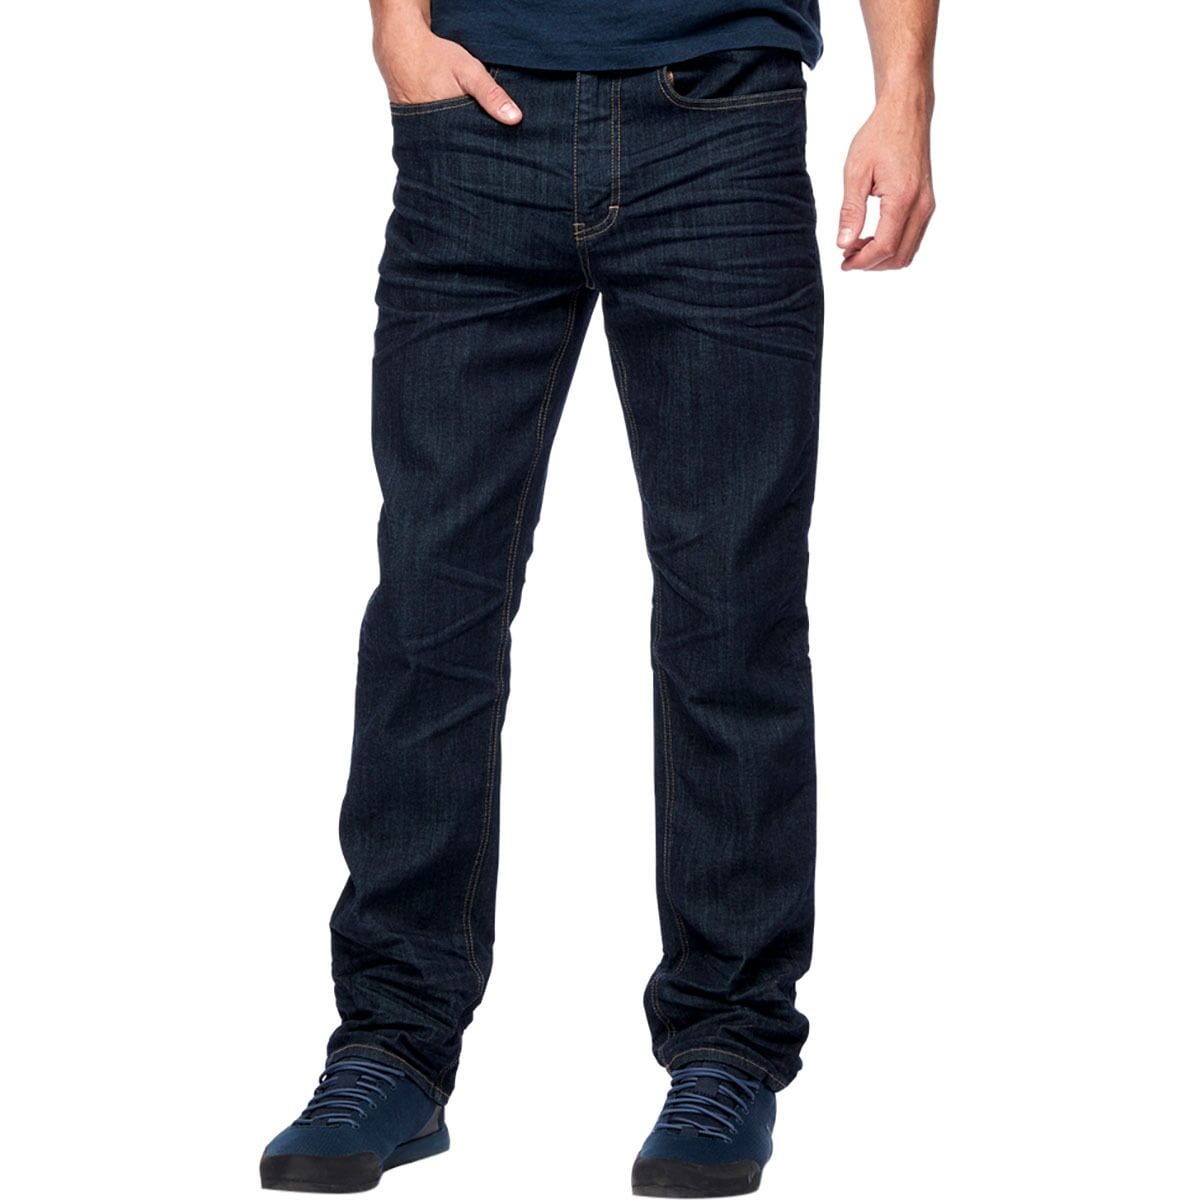 Levis 511 Straight Leg Denim Jeans Mens Size 34x32 - beyond exchange